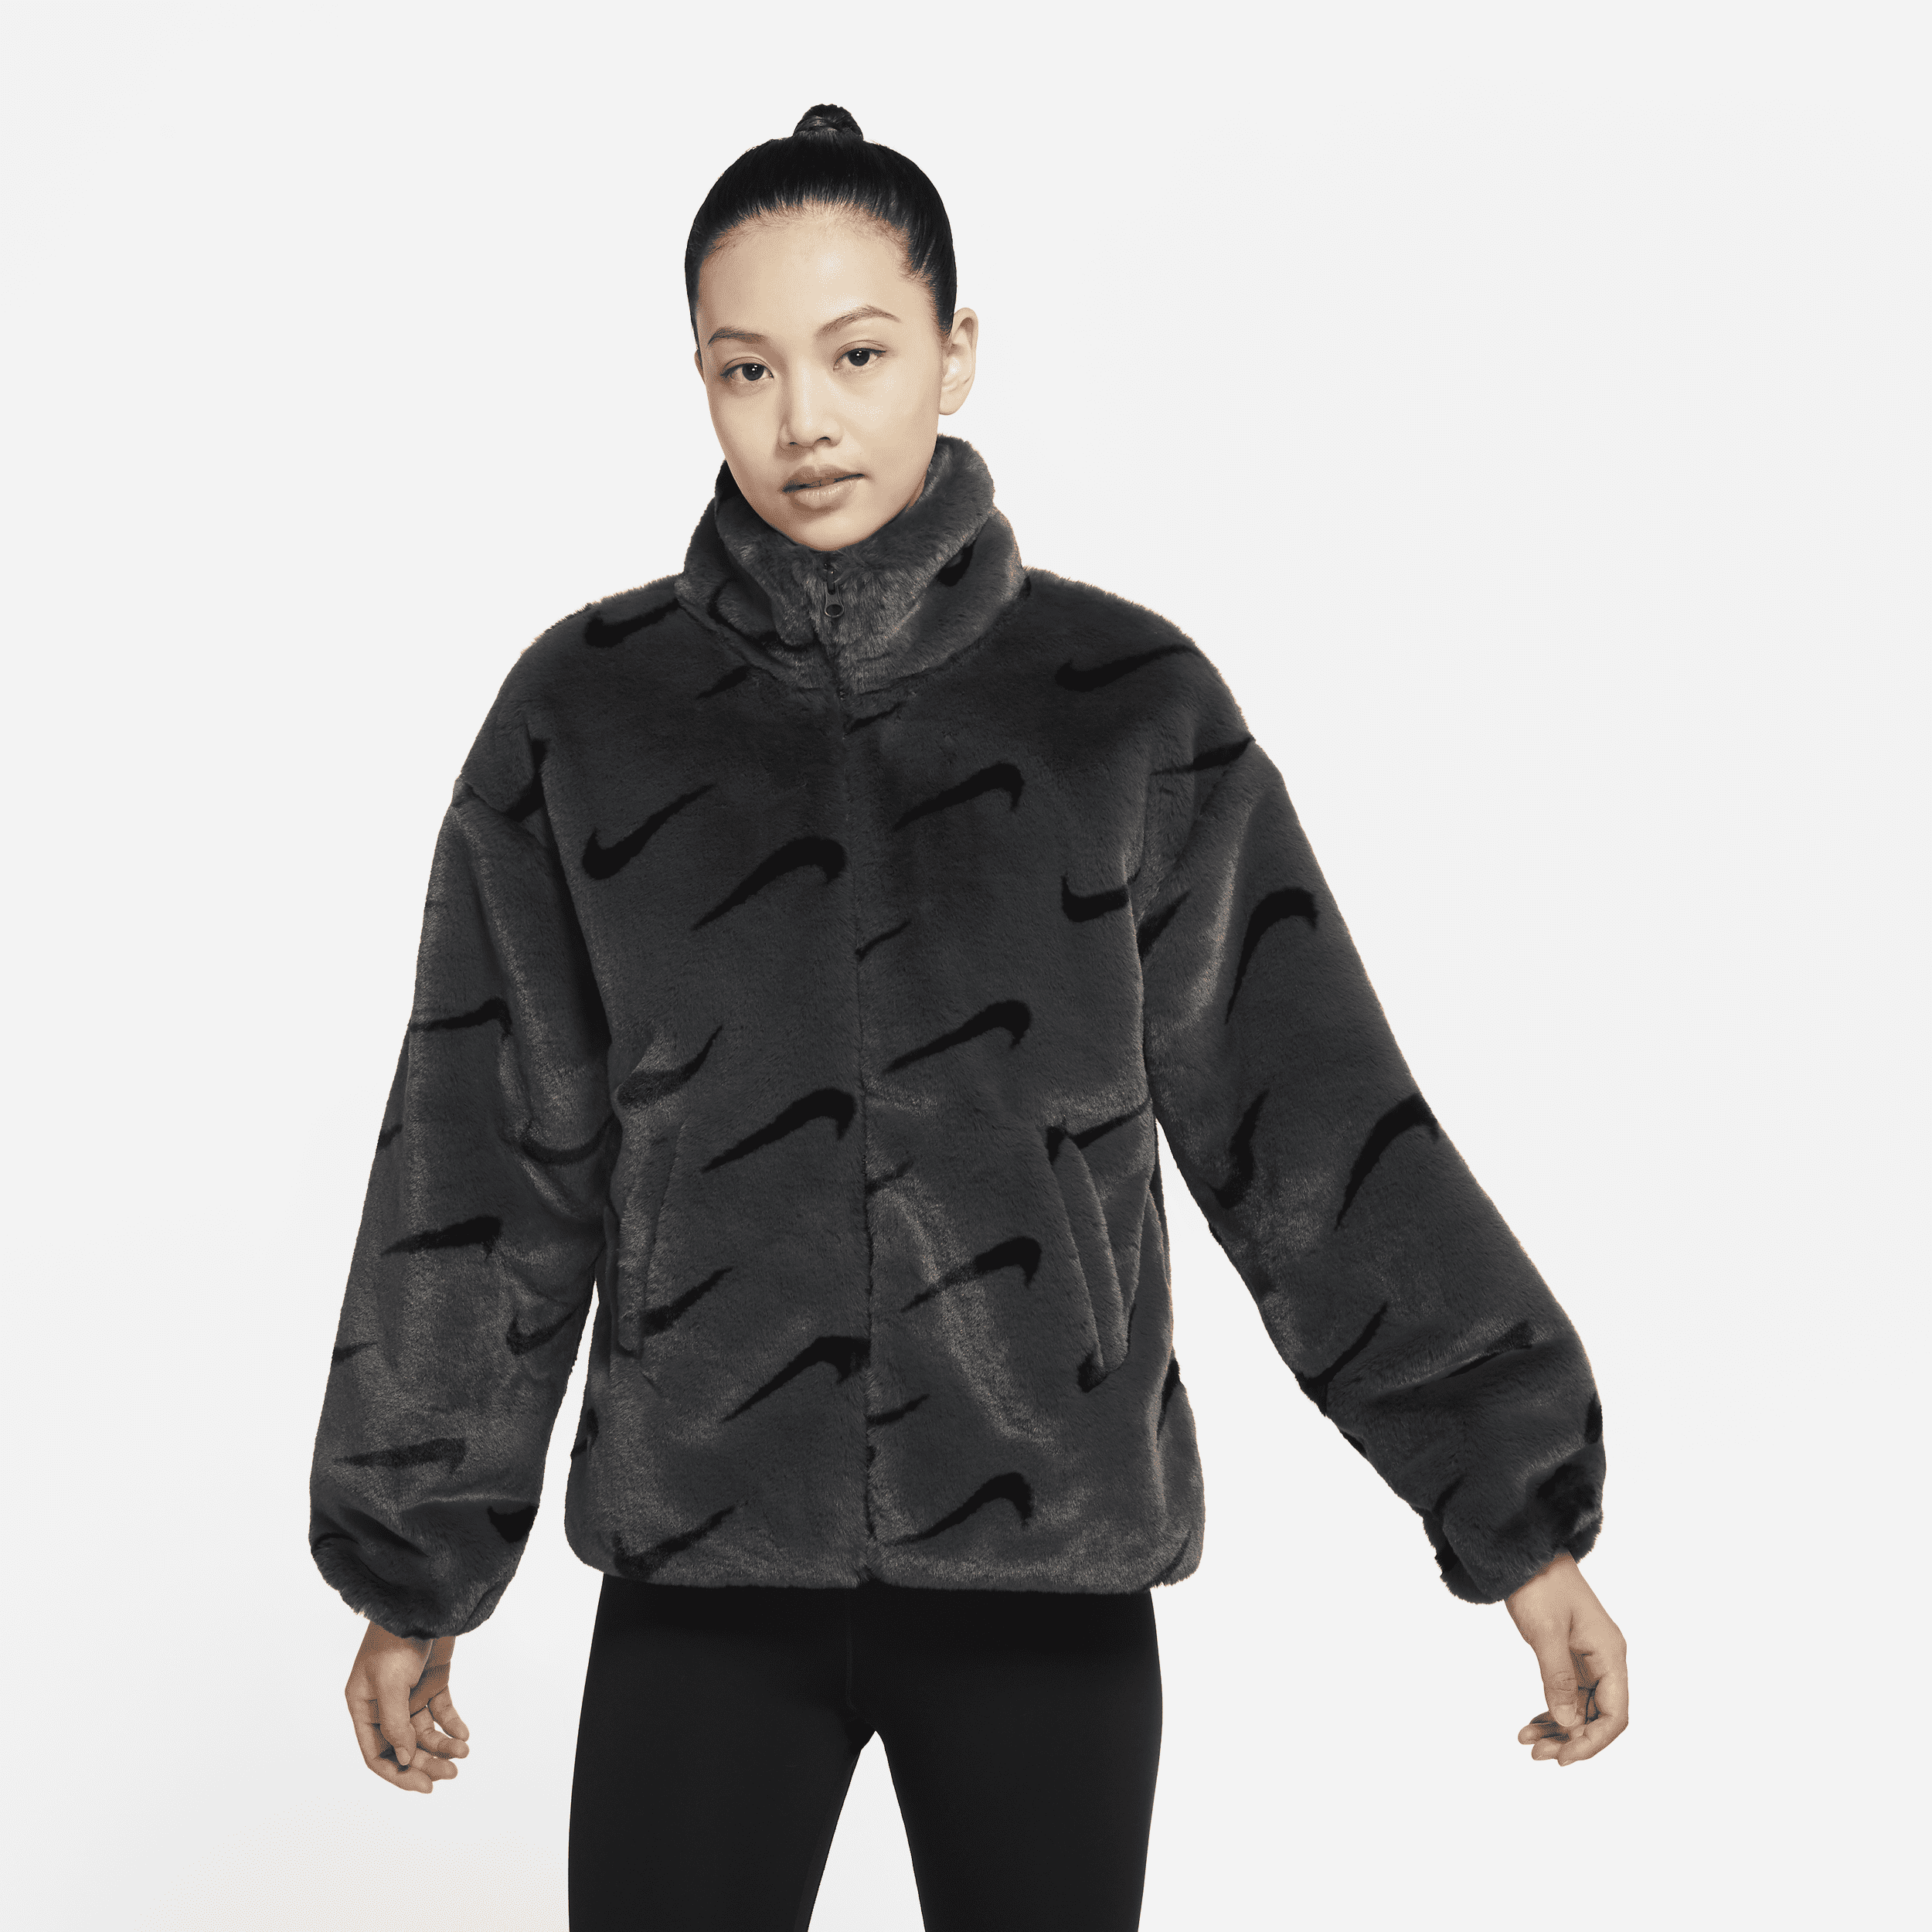 Nike Sportswear Plush-jakke i imiteret pels med print til kvinder - grå